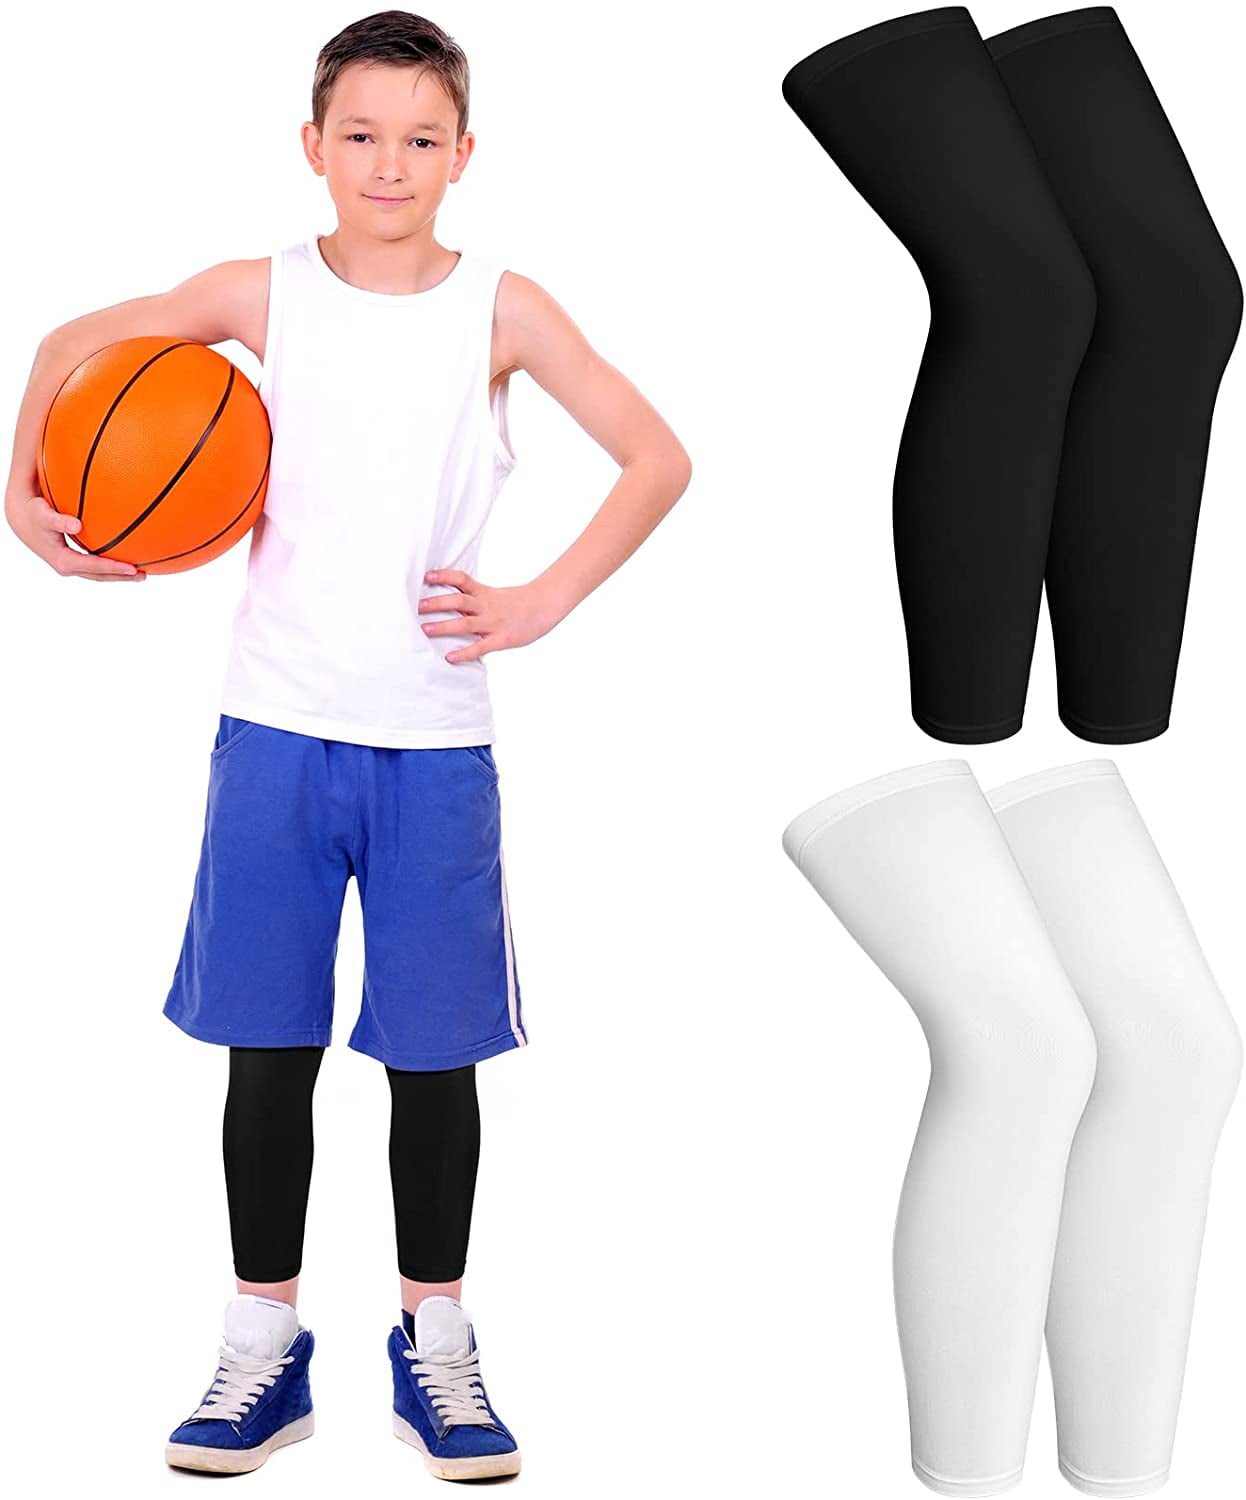 1 Pair Compression Leg Sleeves – Outdoor Basketball Full Length Leg Sleeves  for Men, Women, Youth (Black) 